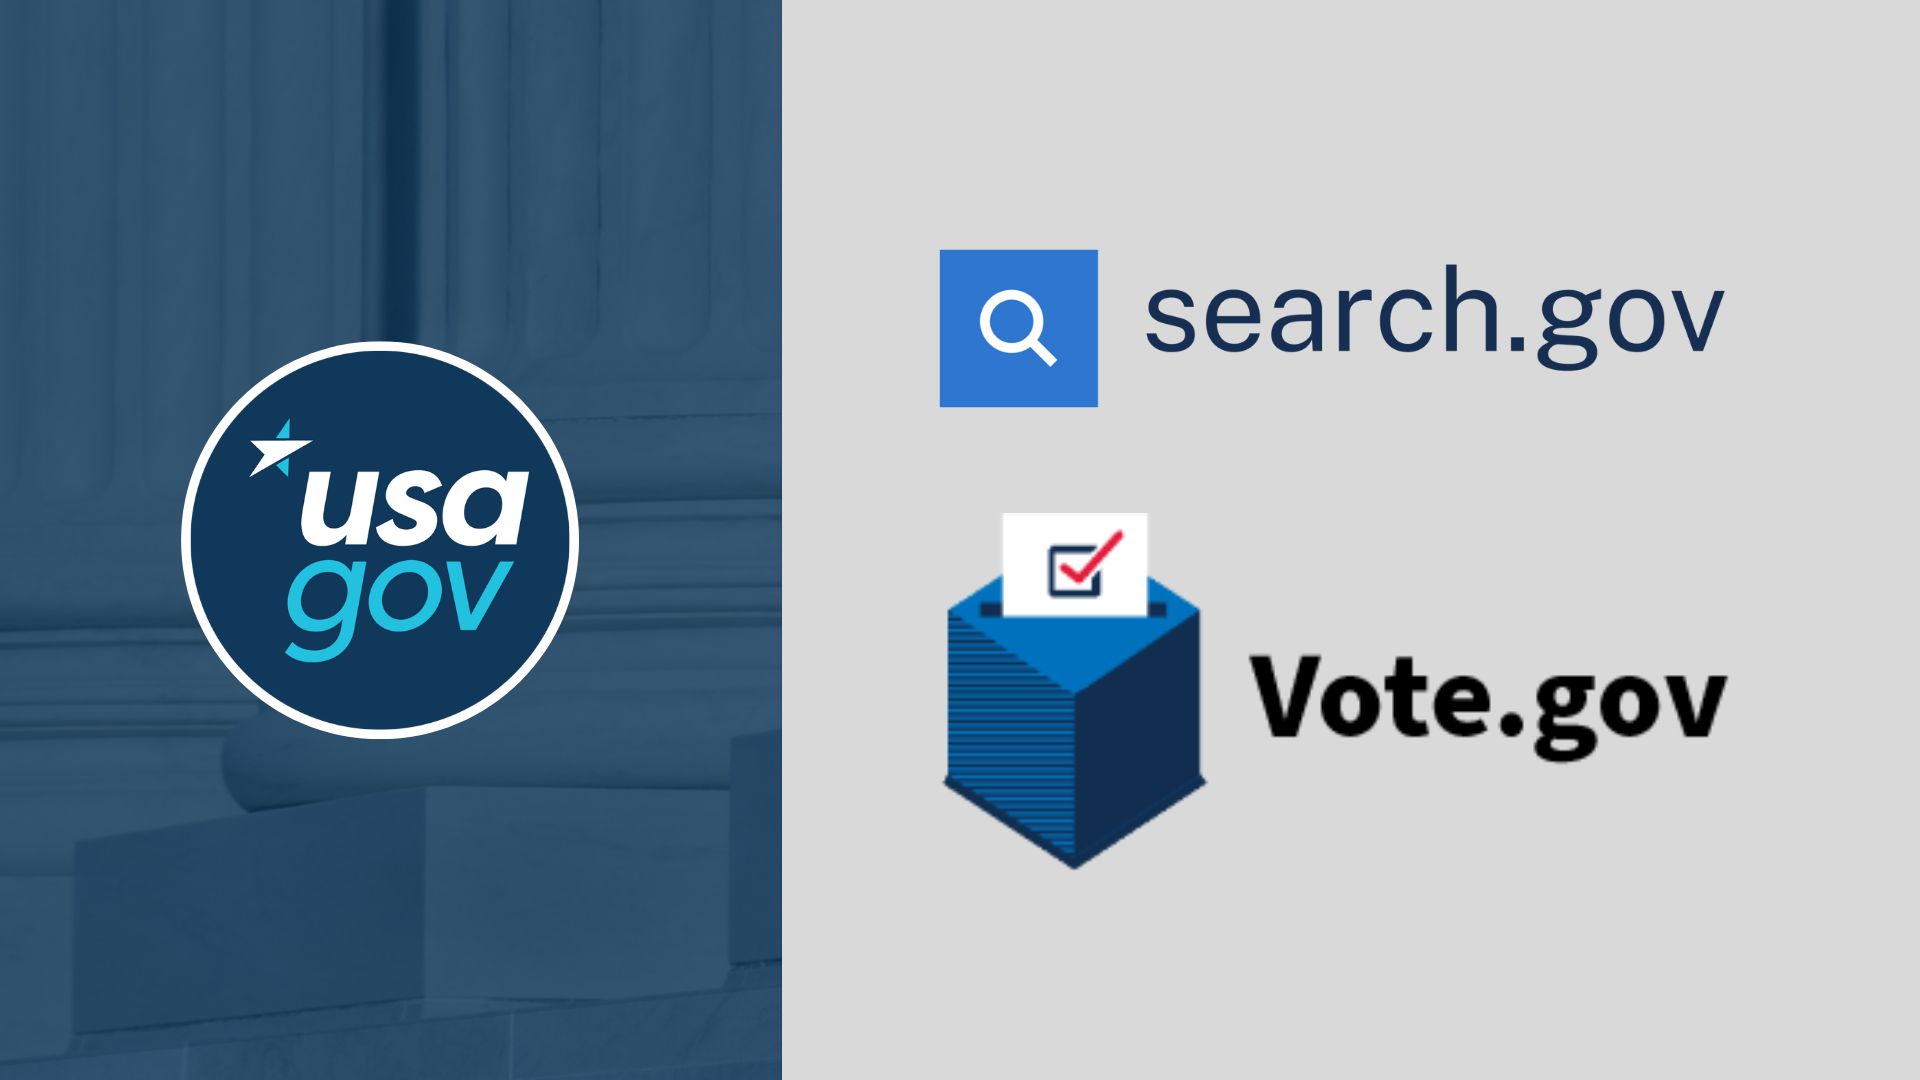 USAGov, Search.gov, and Vote.gov: Meeting People's Needs Together